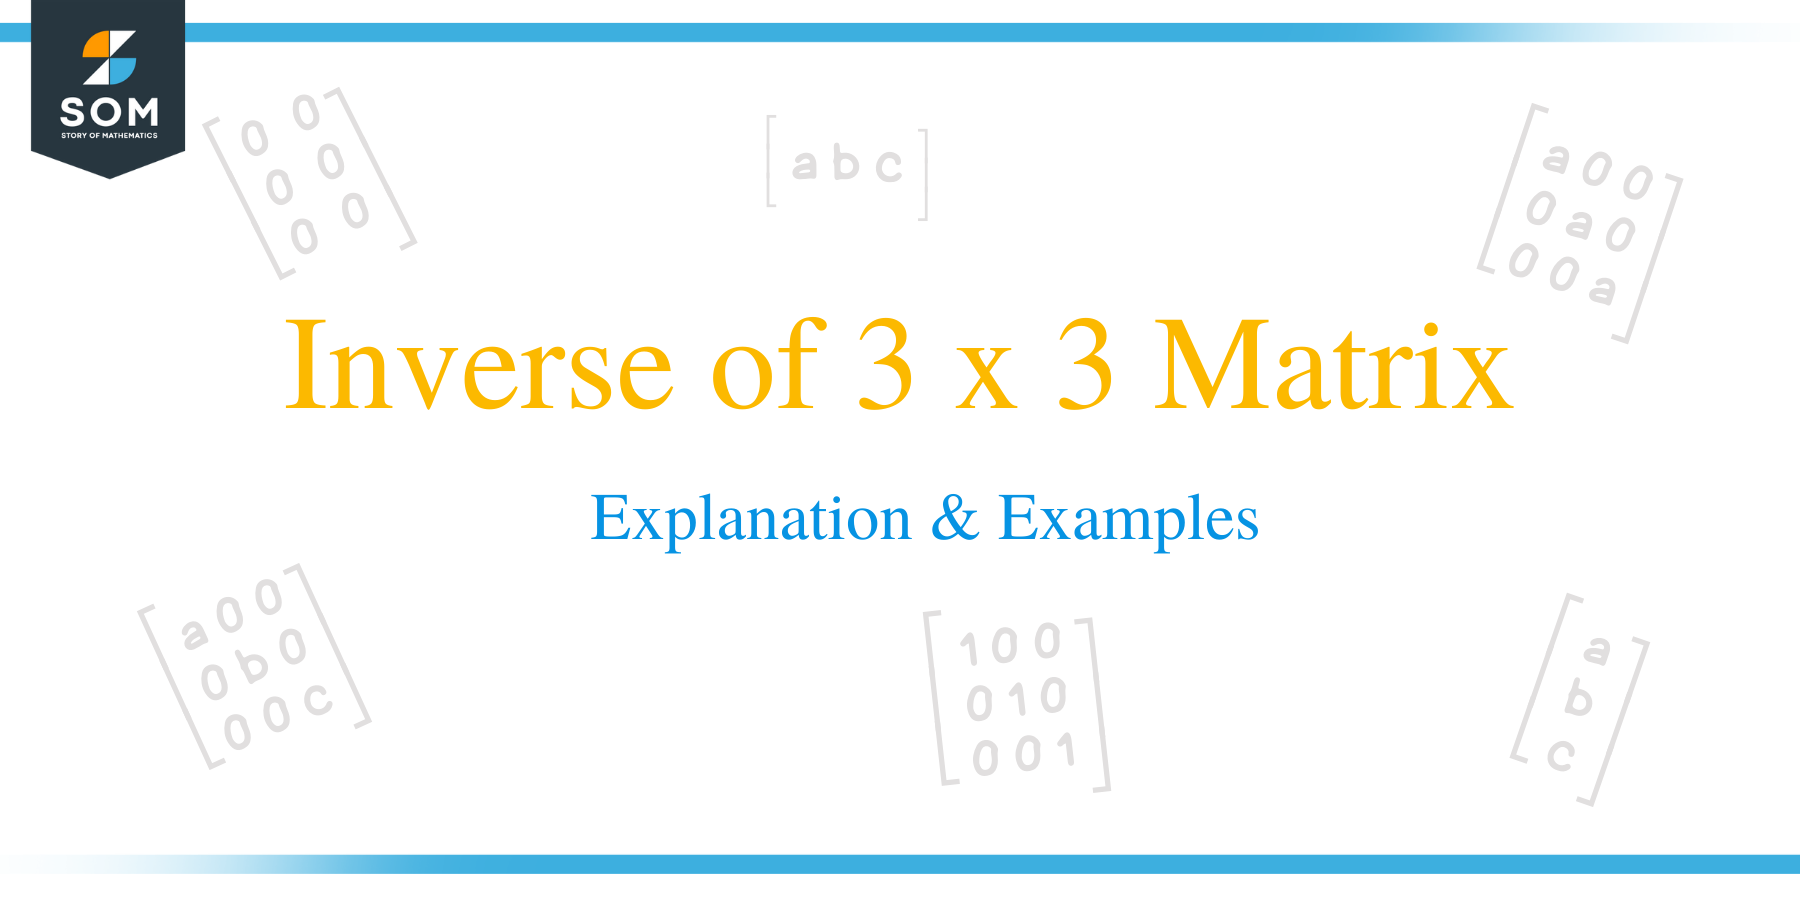 Inverse of 3 x 3 Matrix